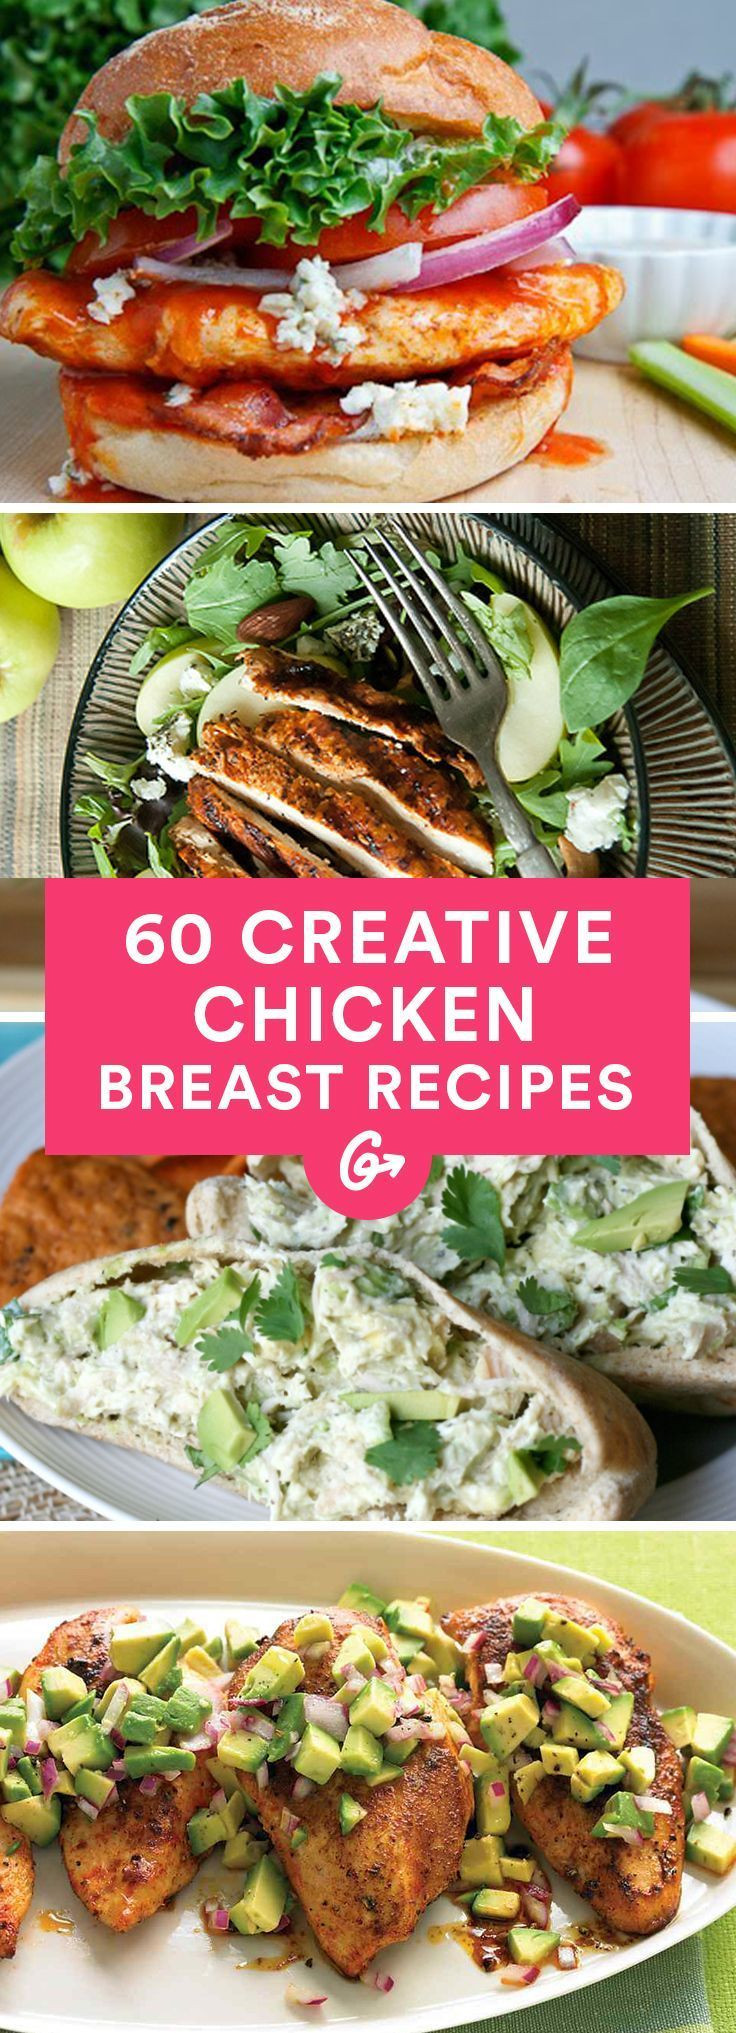 Dinner Ideas With Chicken Breast
 The 25 best Healthy chicken recipes ideas on Pinterest